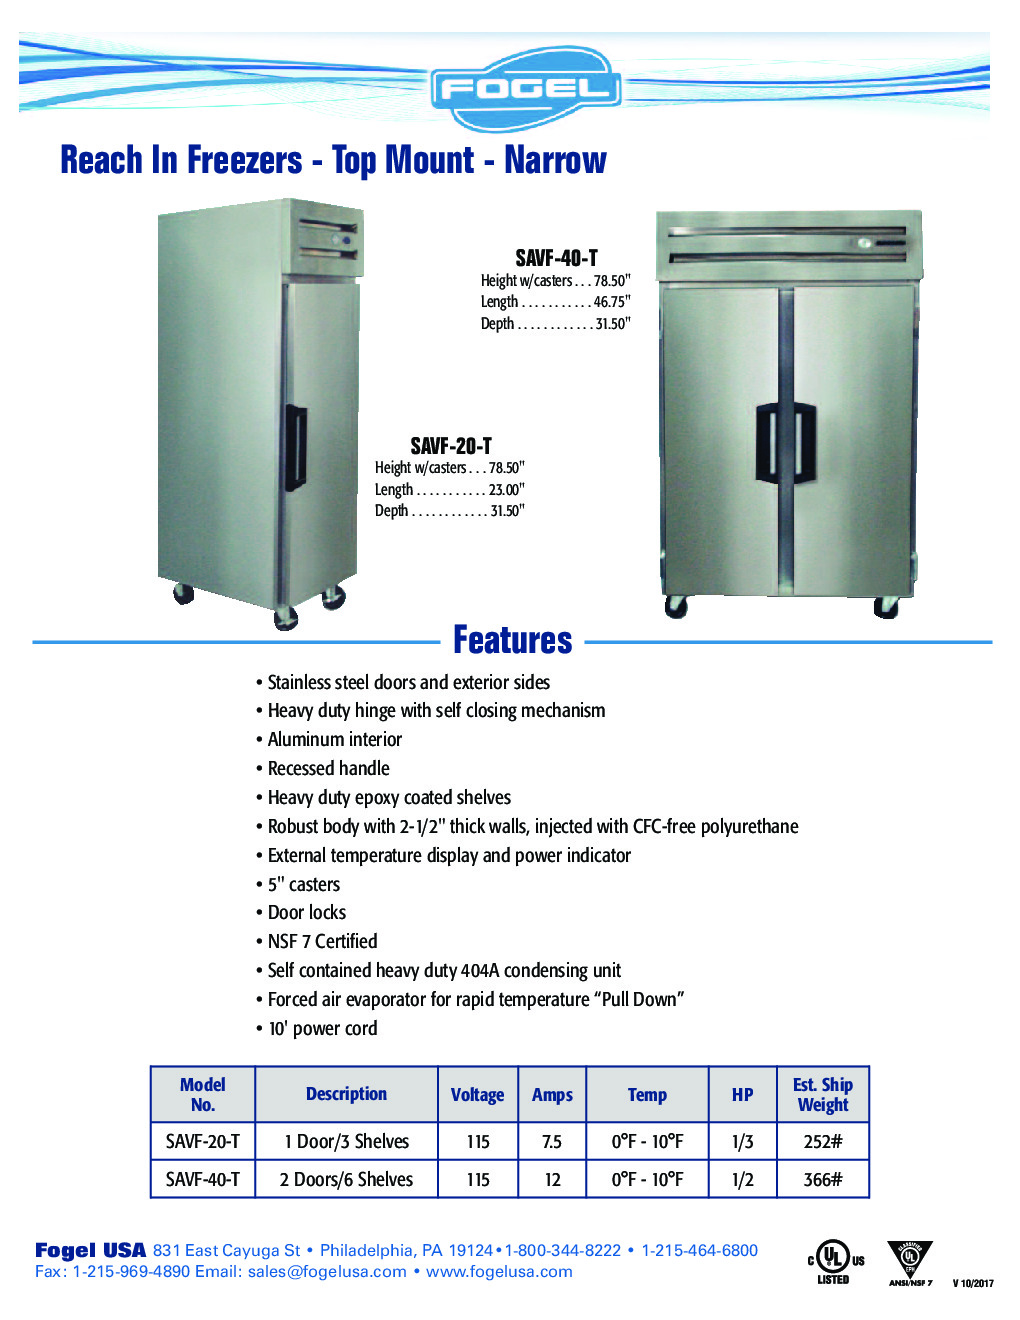 Fogel USA SAVF-40-T Reach-In Freezer